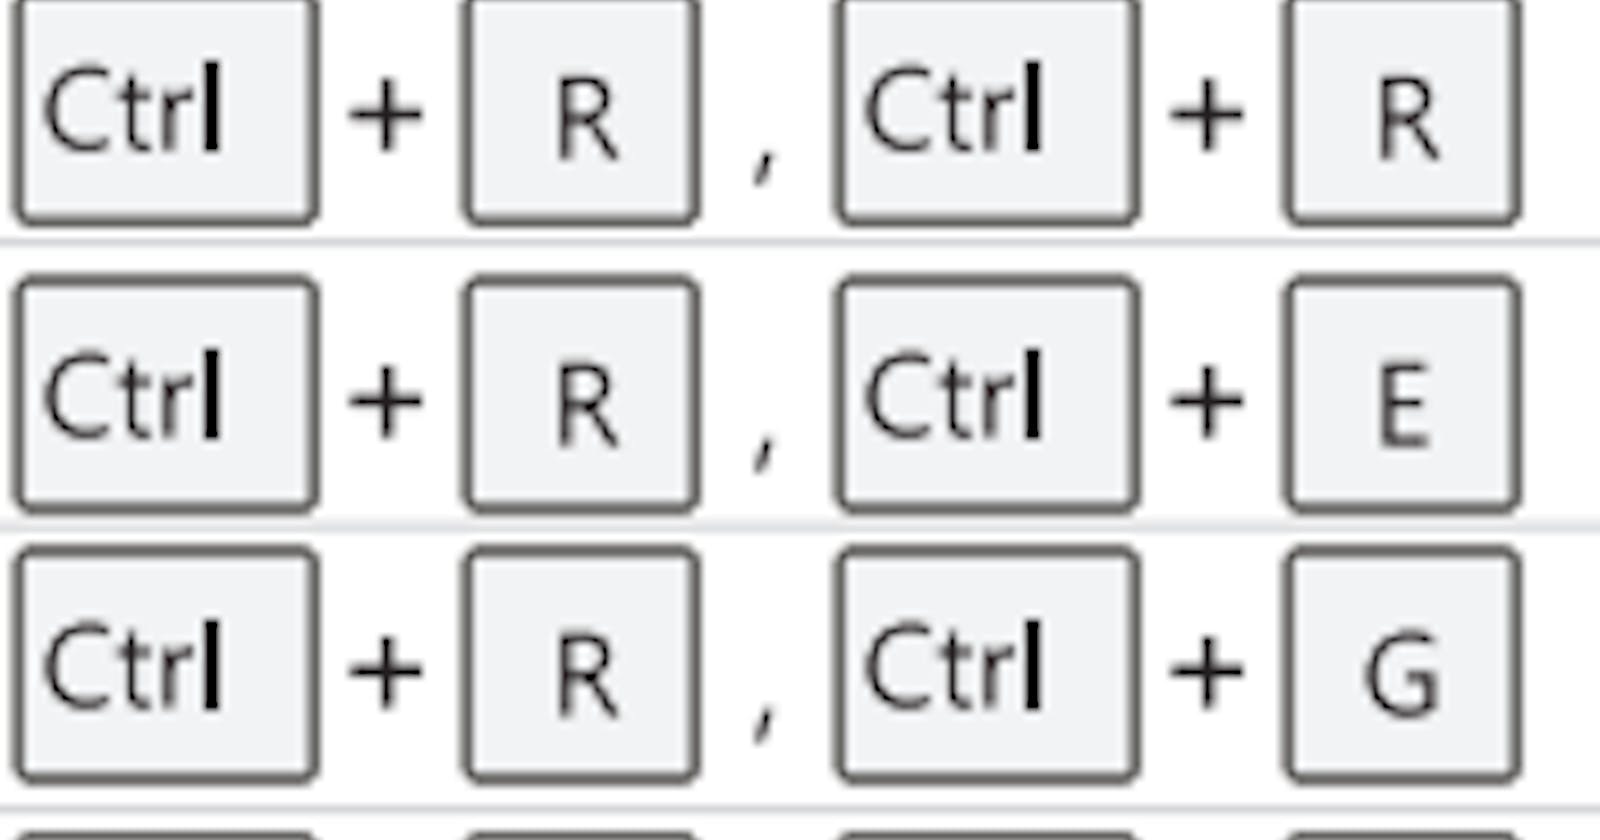 Visual Studio Keyboard Shortcuts